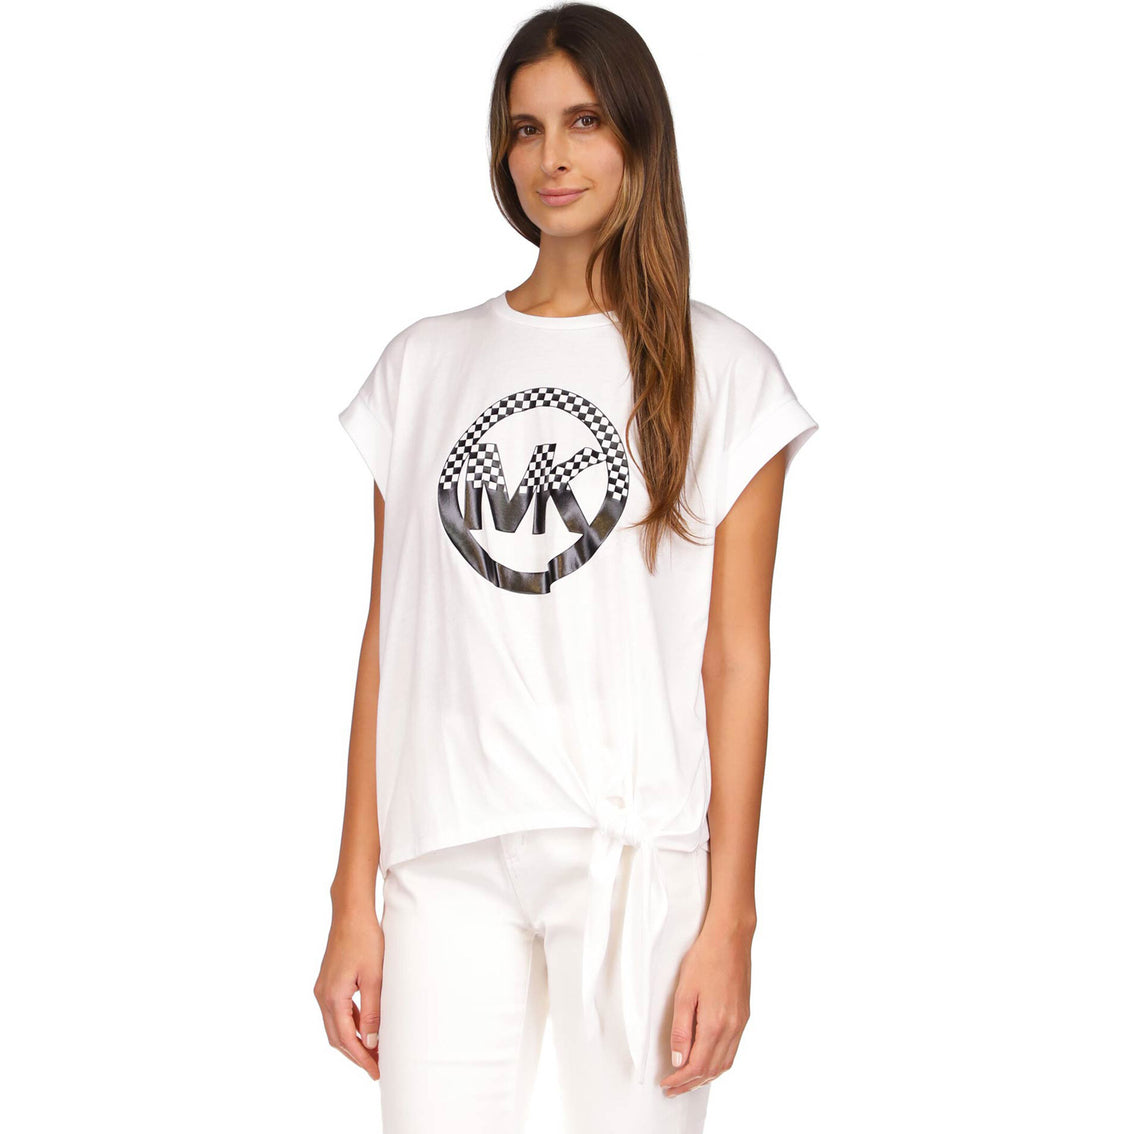 Michael Kors Shirts For Women Discount  jackiesnewscouk 1691784678